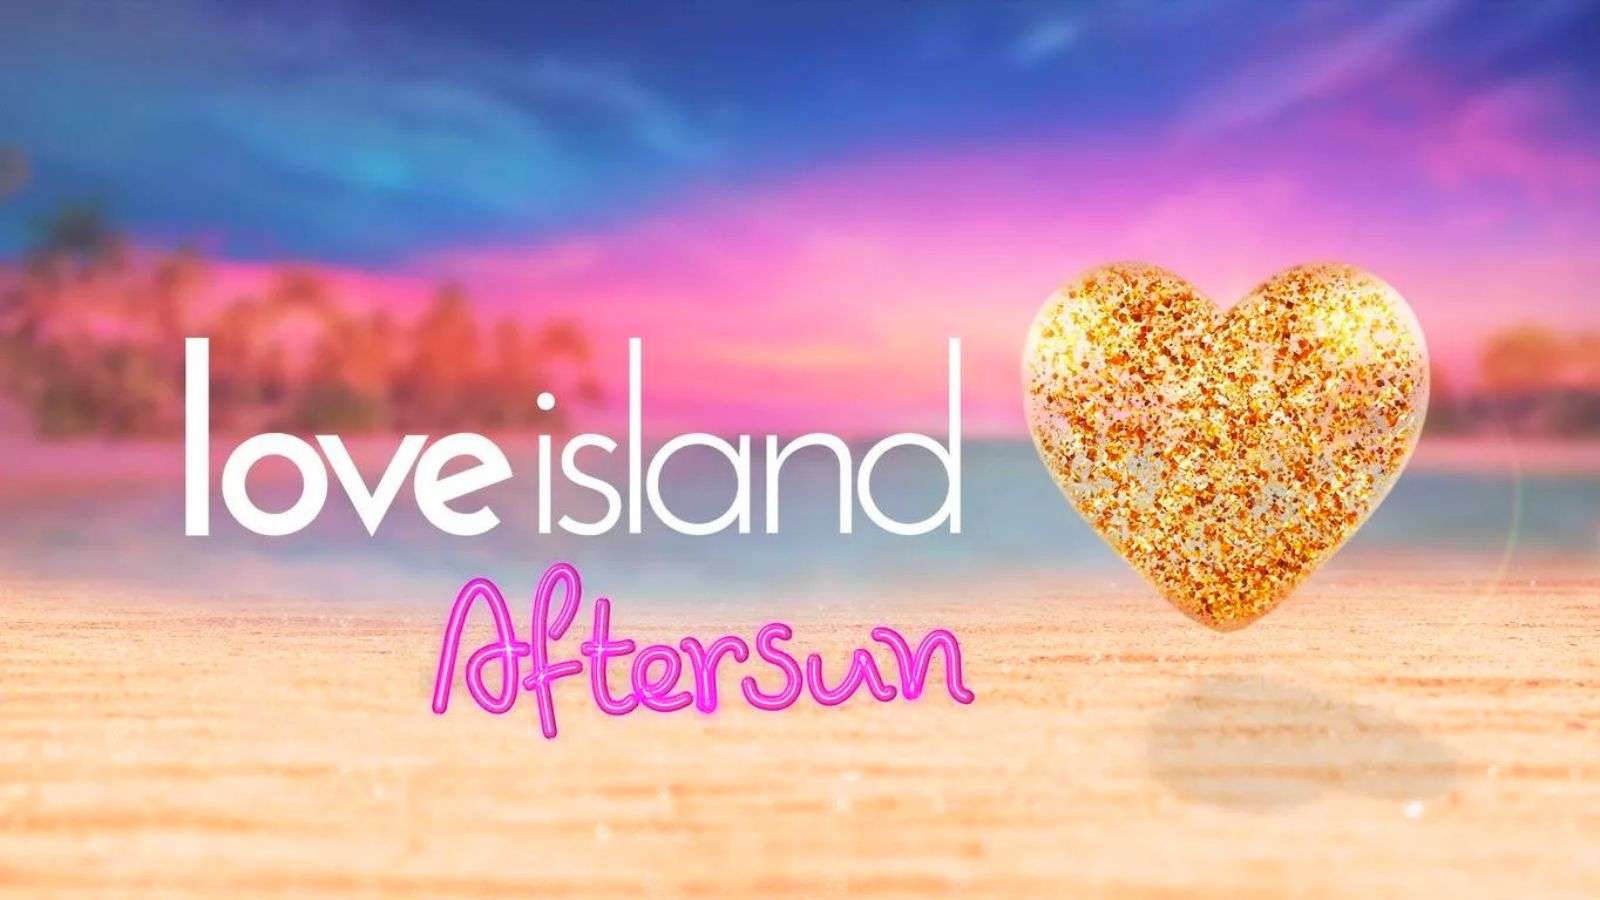 Love Island: Aftersun new logo